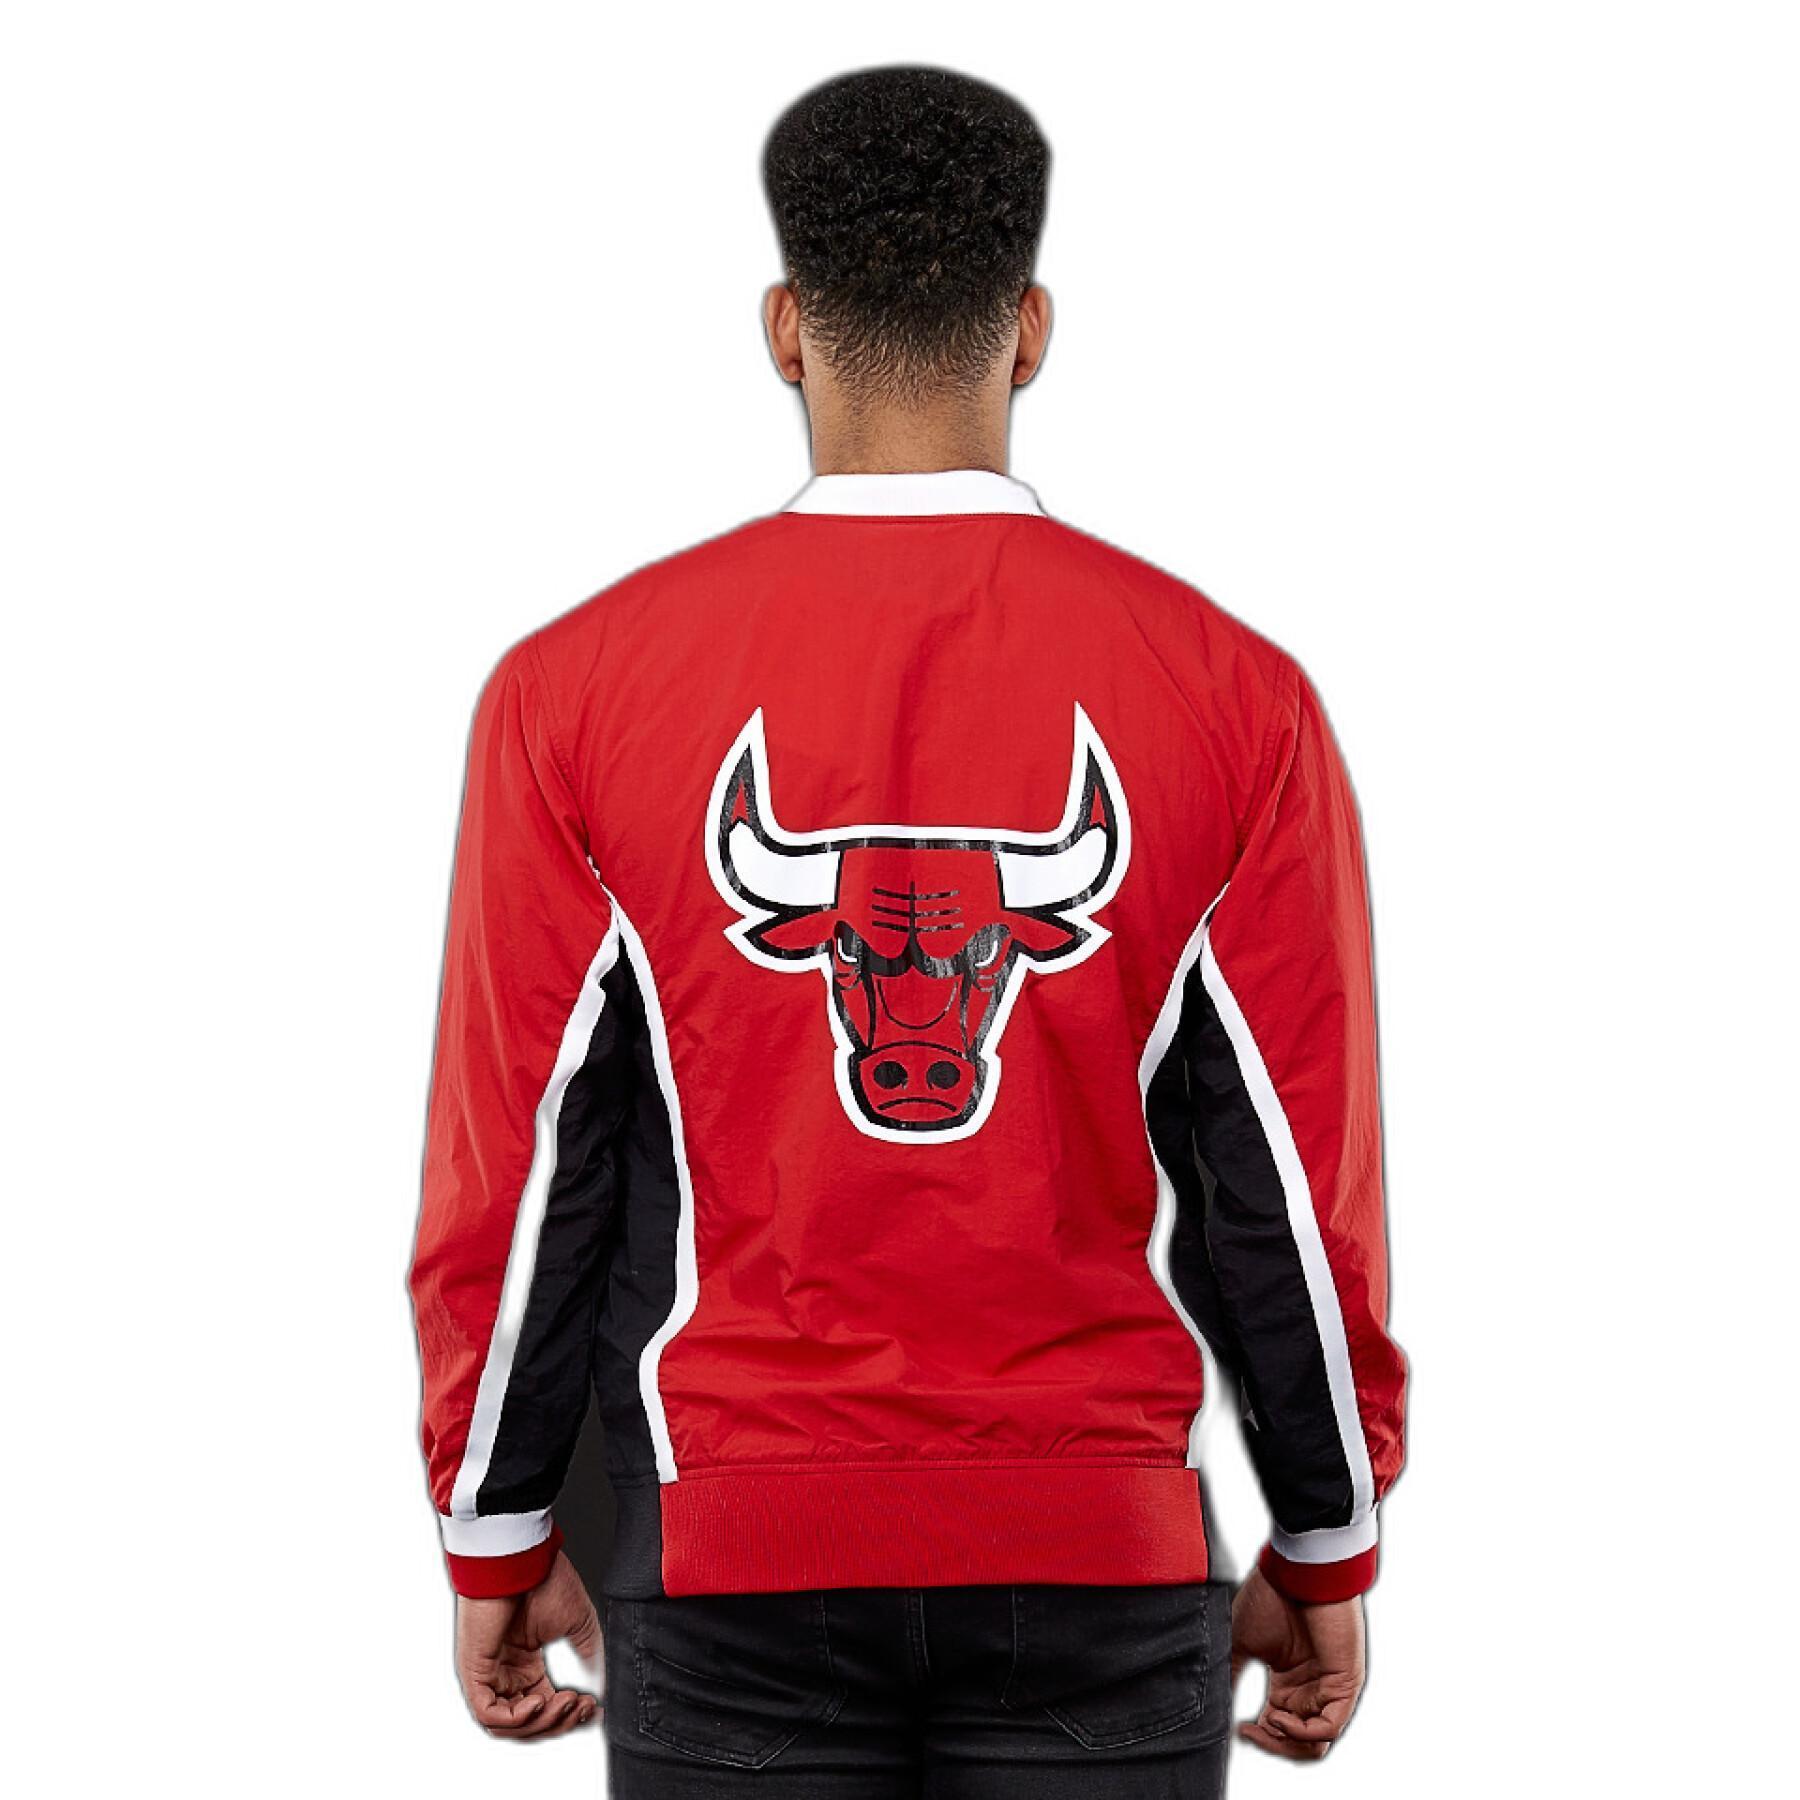 Jacke Chicago Bulls authentic